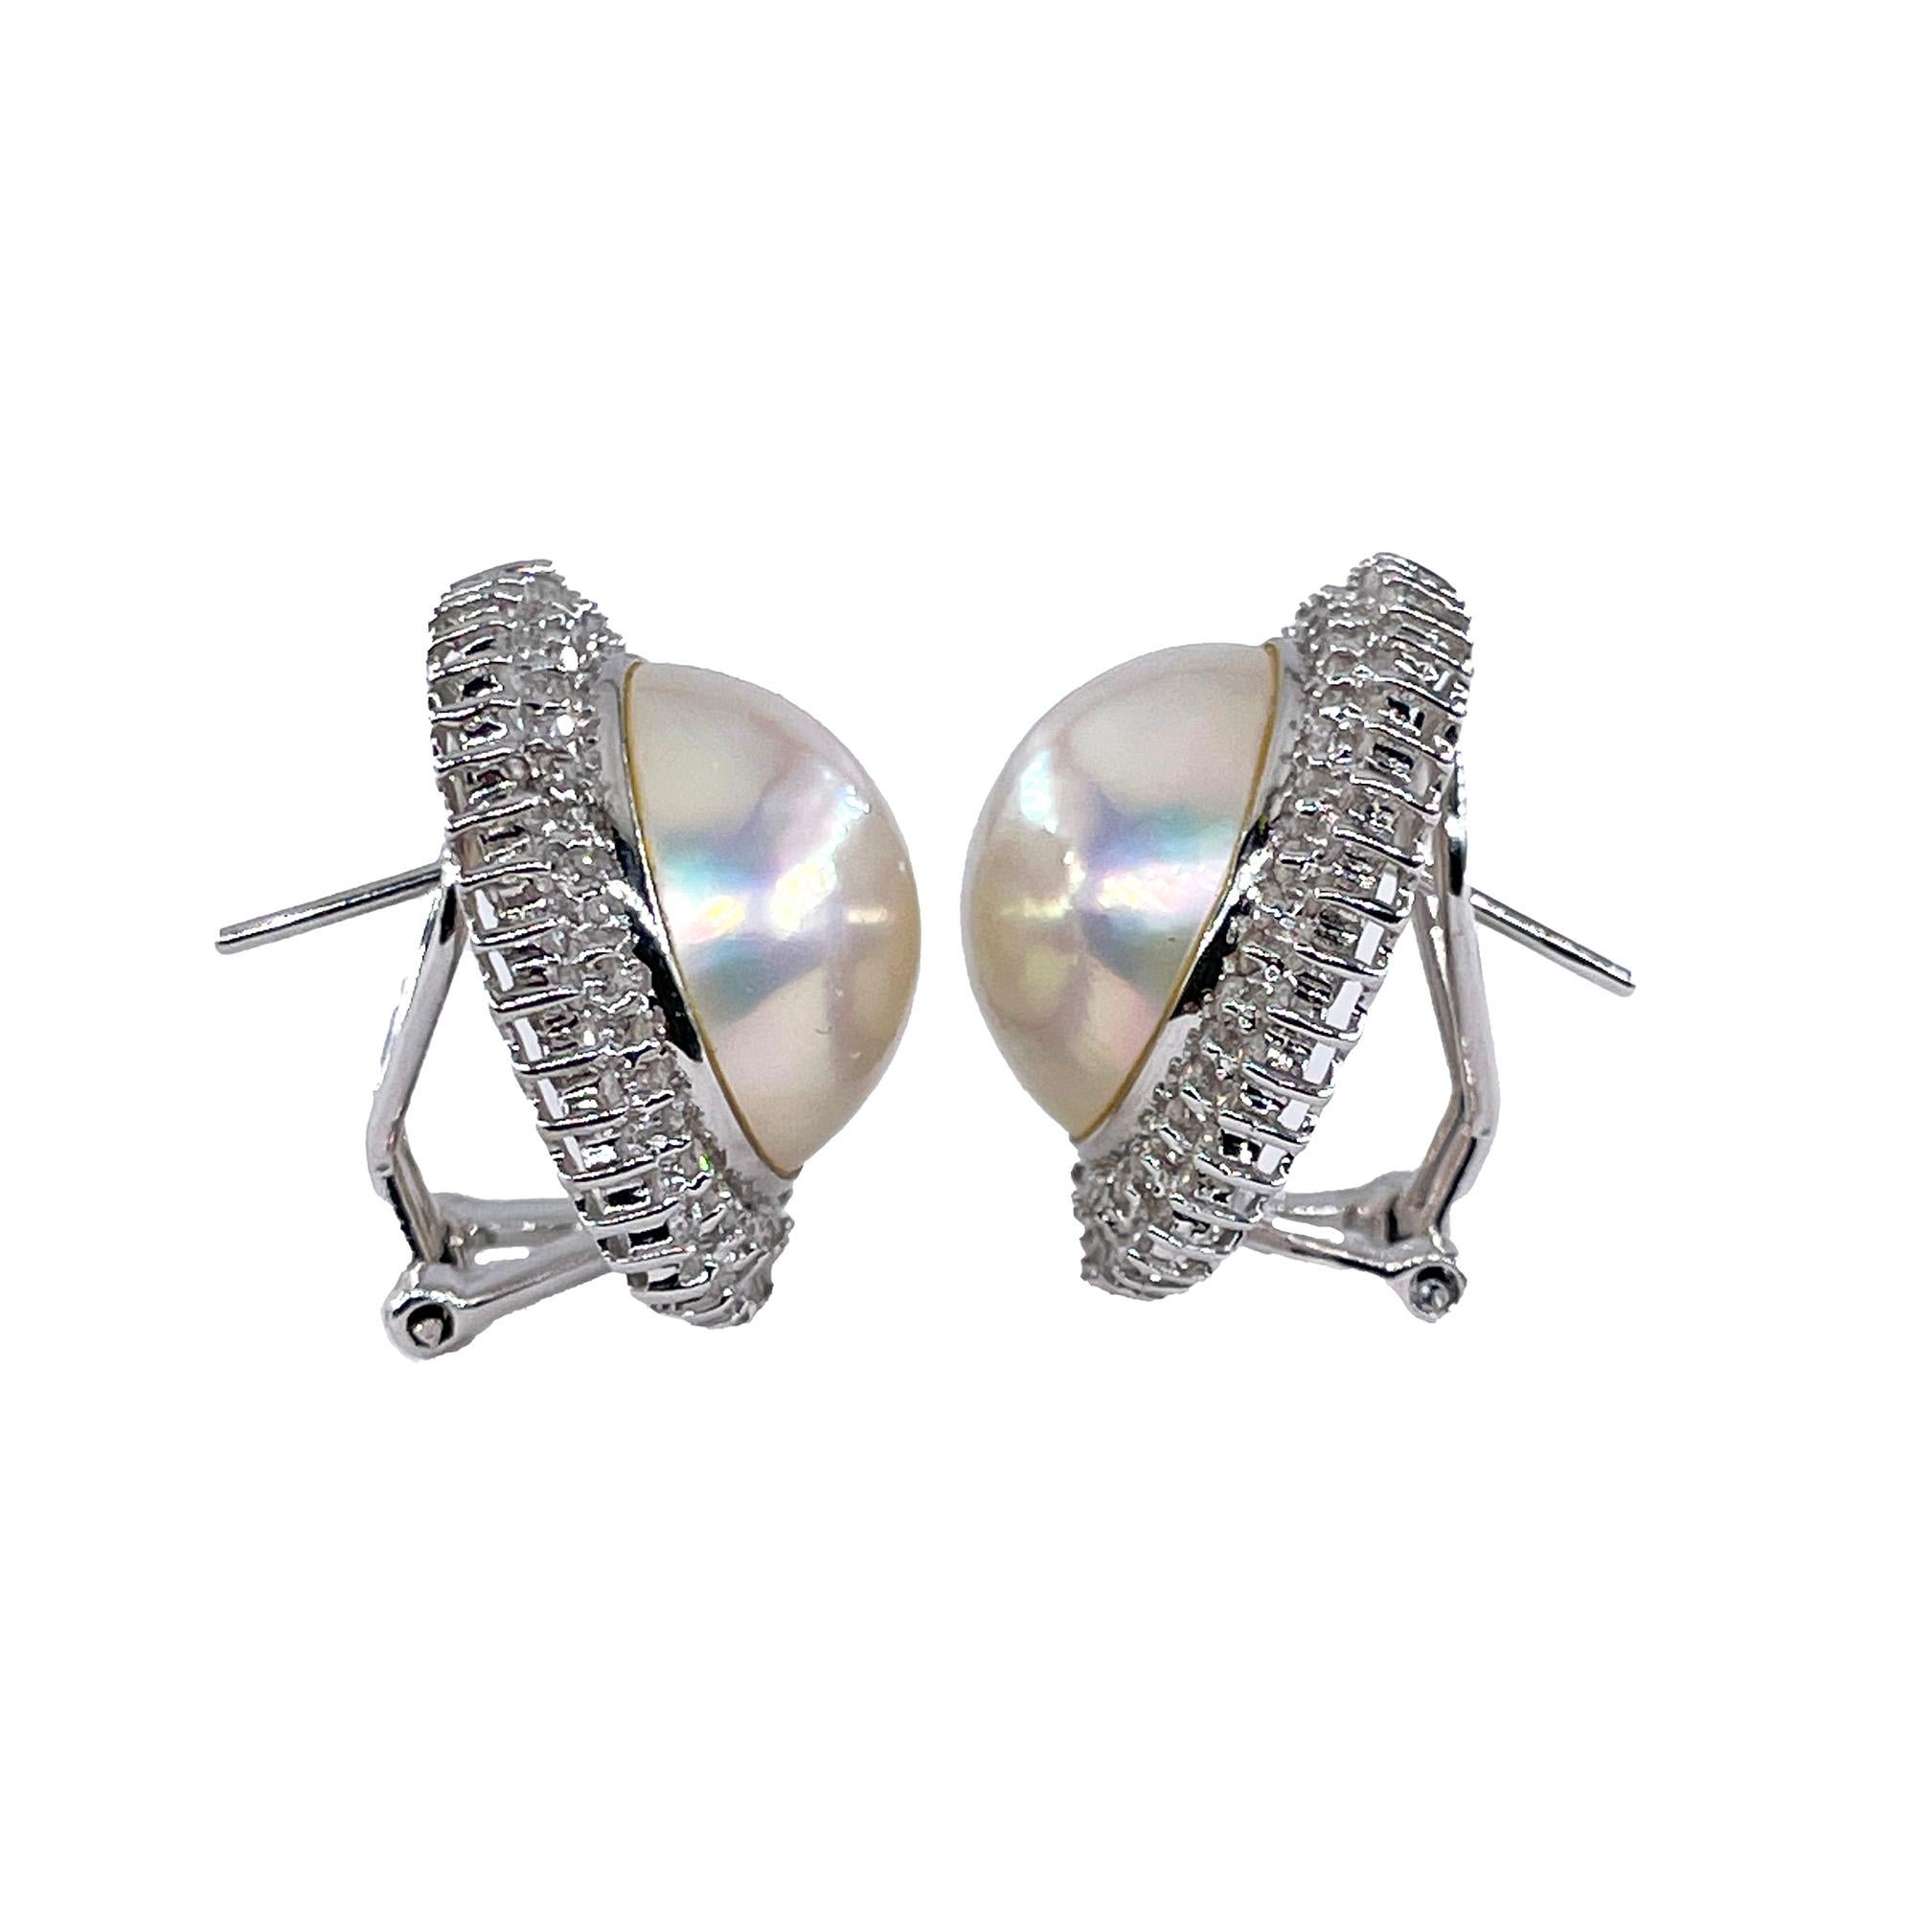 Modern Estate Vintage 14k White Gold Mabe Pearl 2.0ct Diamond Double Halo Earrings